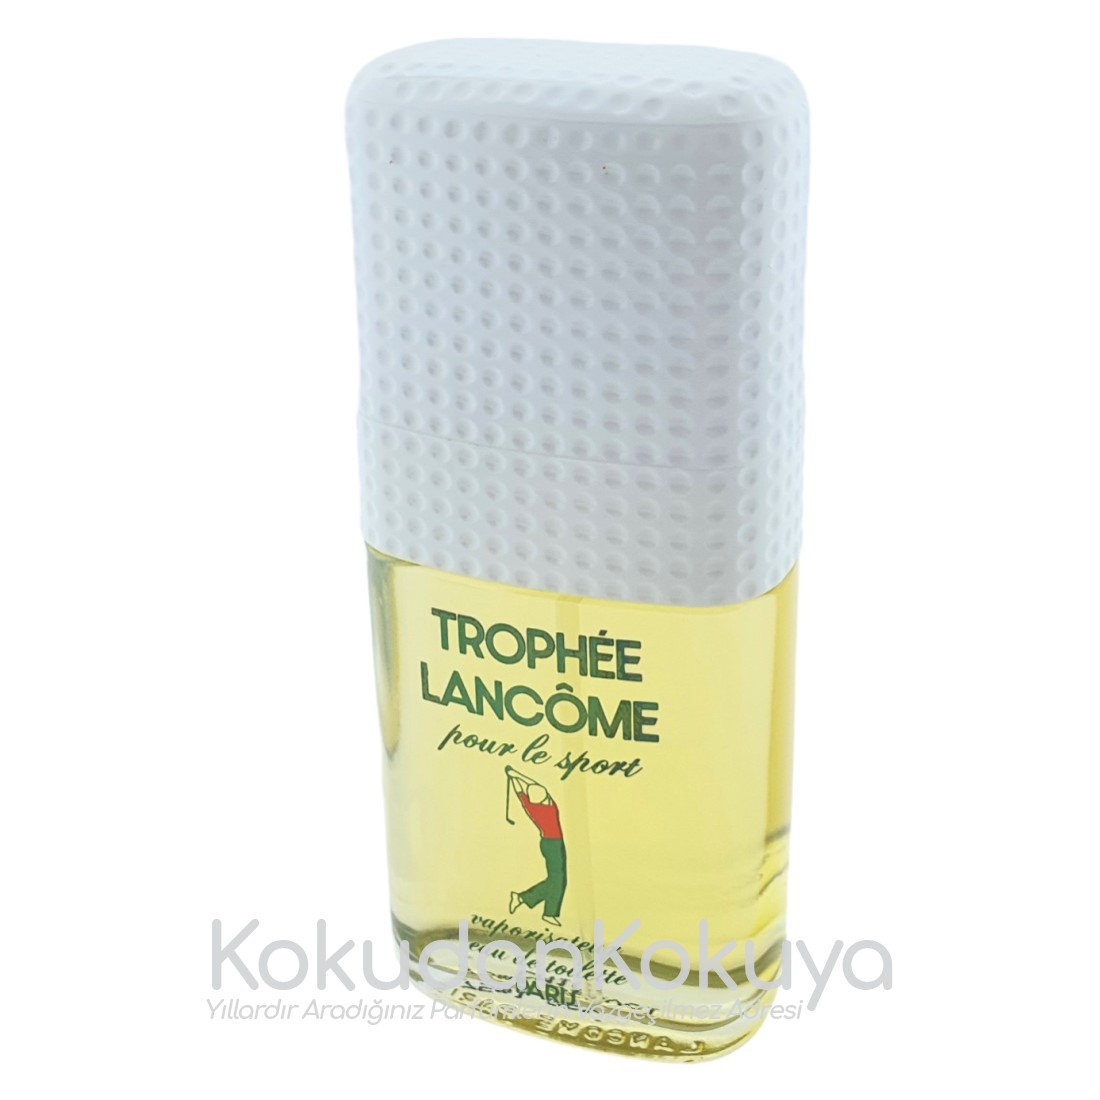 LANCOME Trophee (Vintage) Parfüm Kadın 75ml Eau De Toilette (EDT) Sprey 